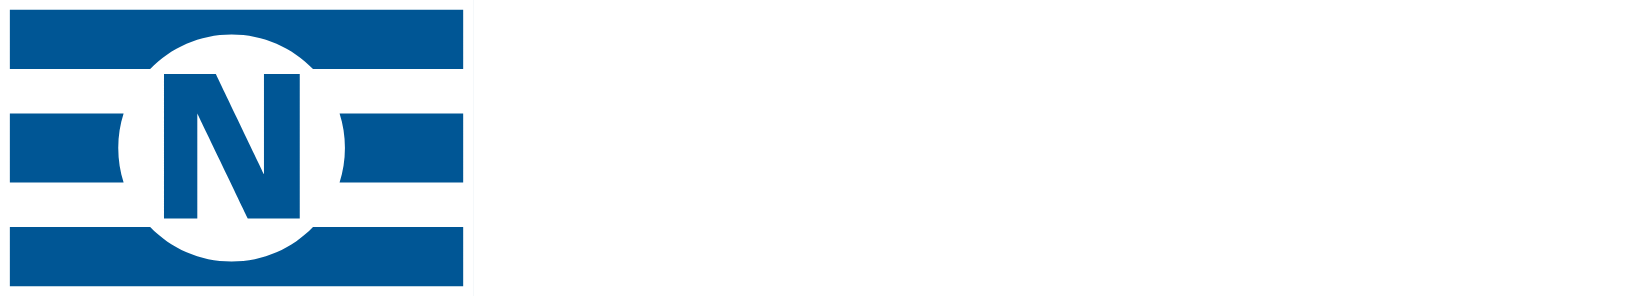 Navios Maritime Partners logo large for dark backgrounds (transparent PNG)